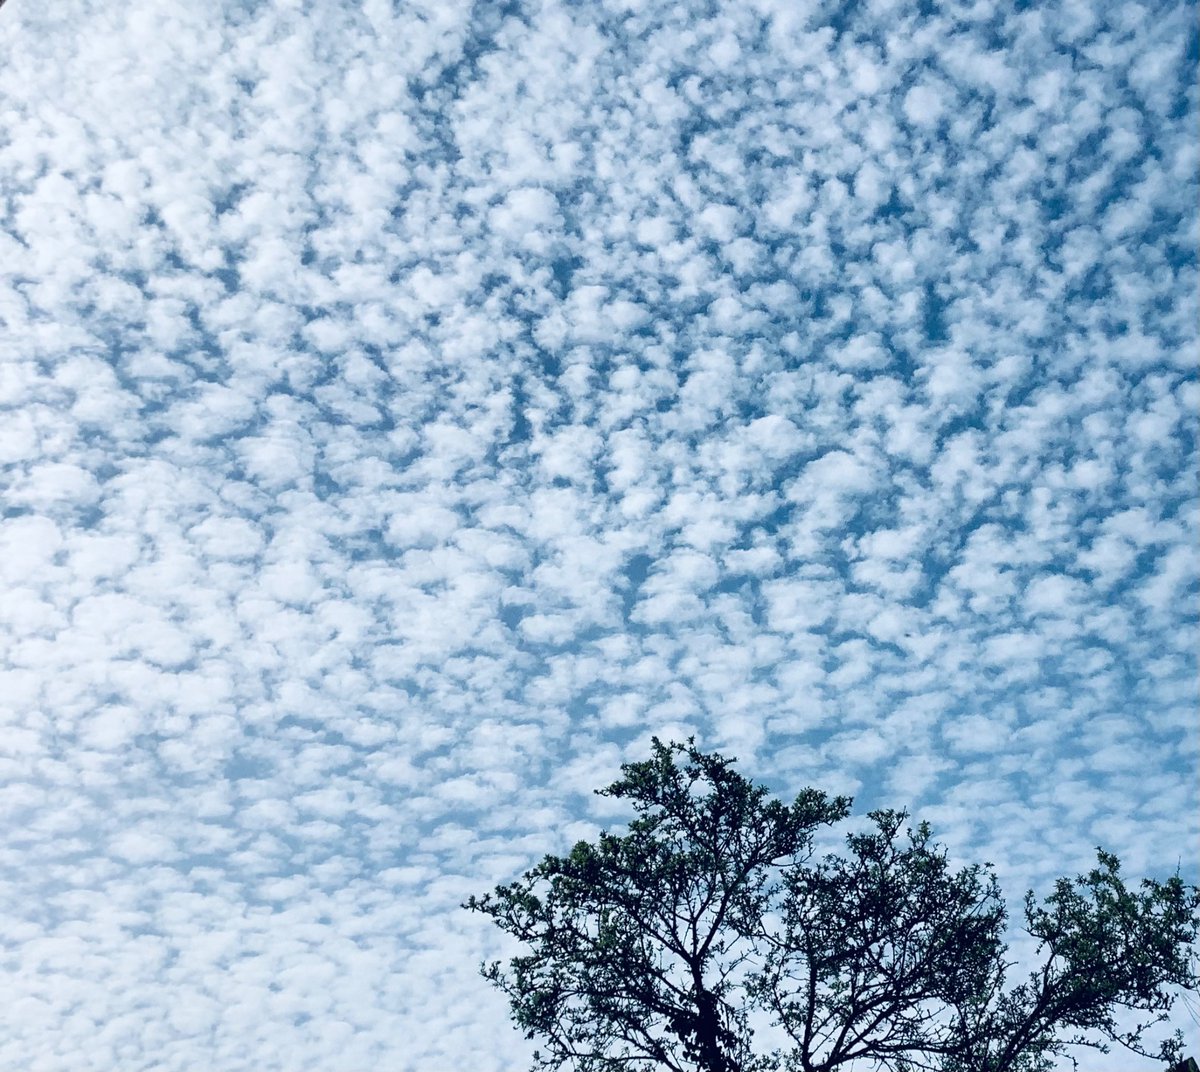 Mackerel sky a few days ago